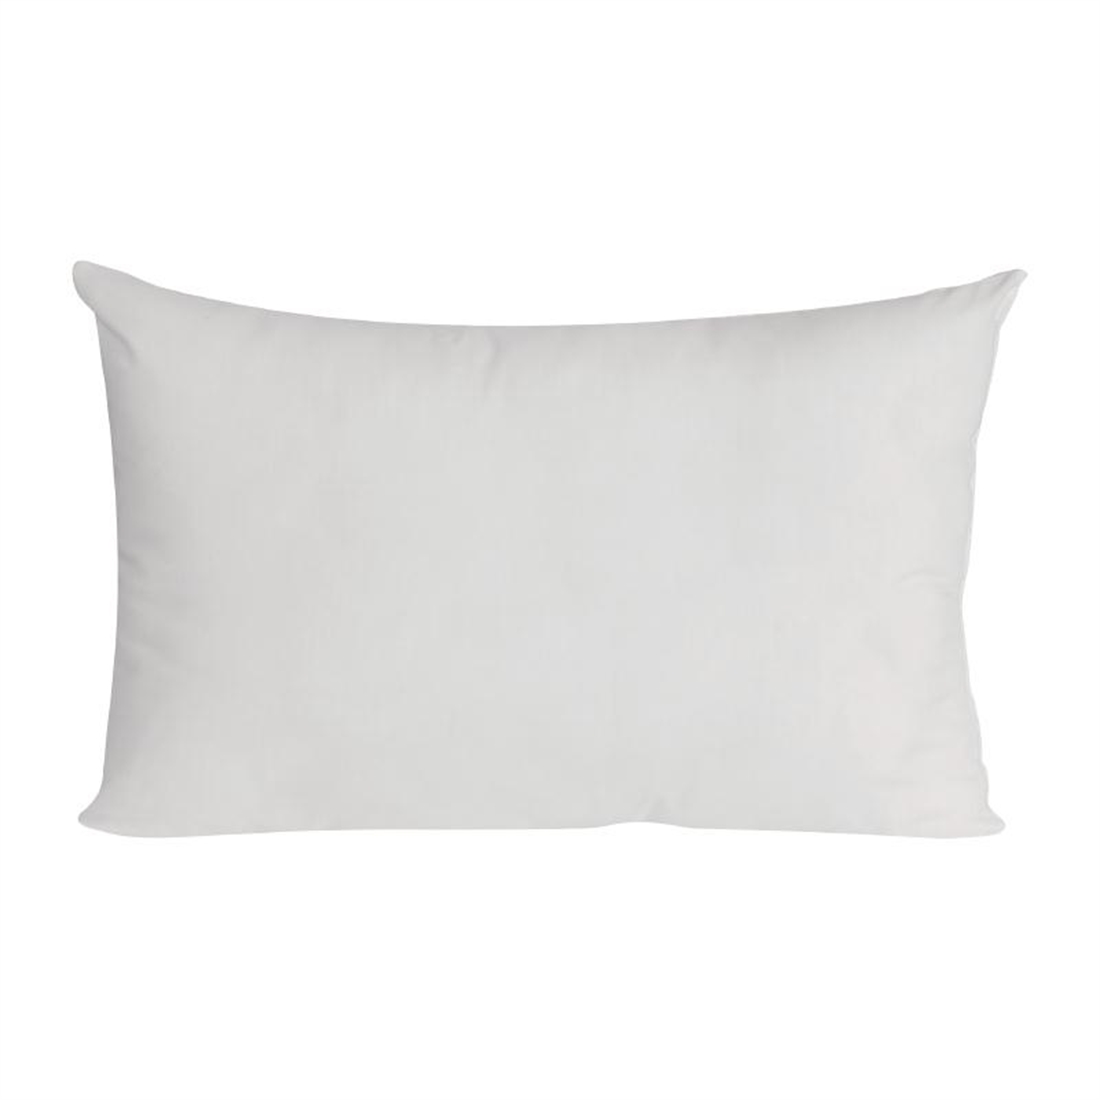 Mitre Essentials Polyrest Pillow Protector